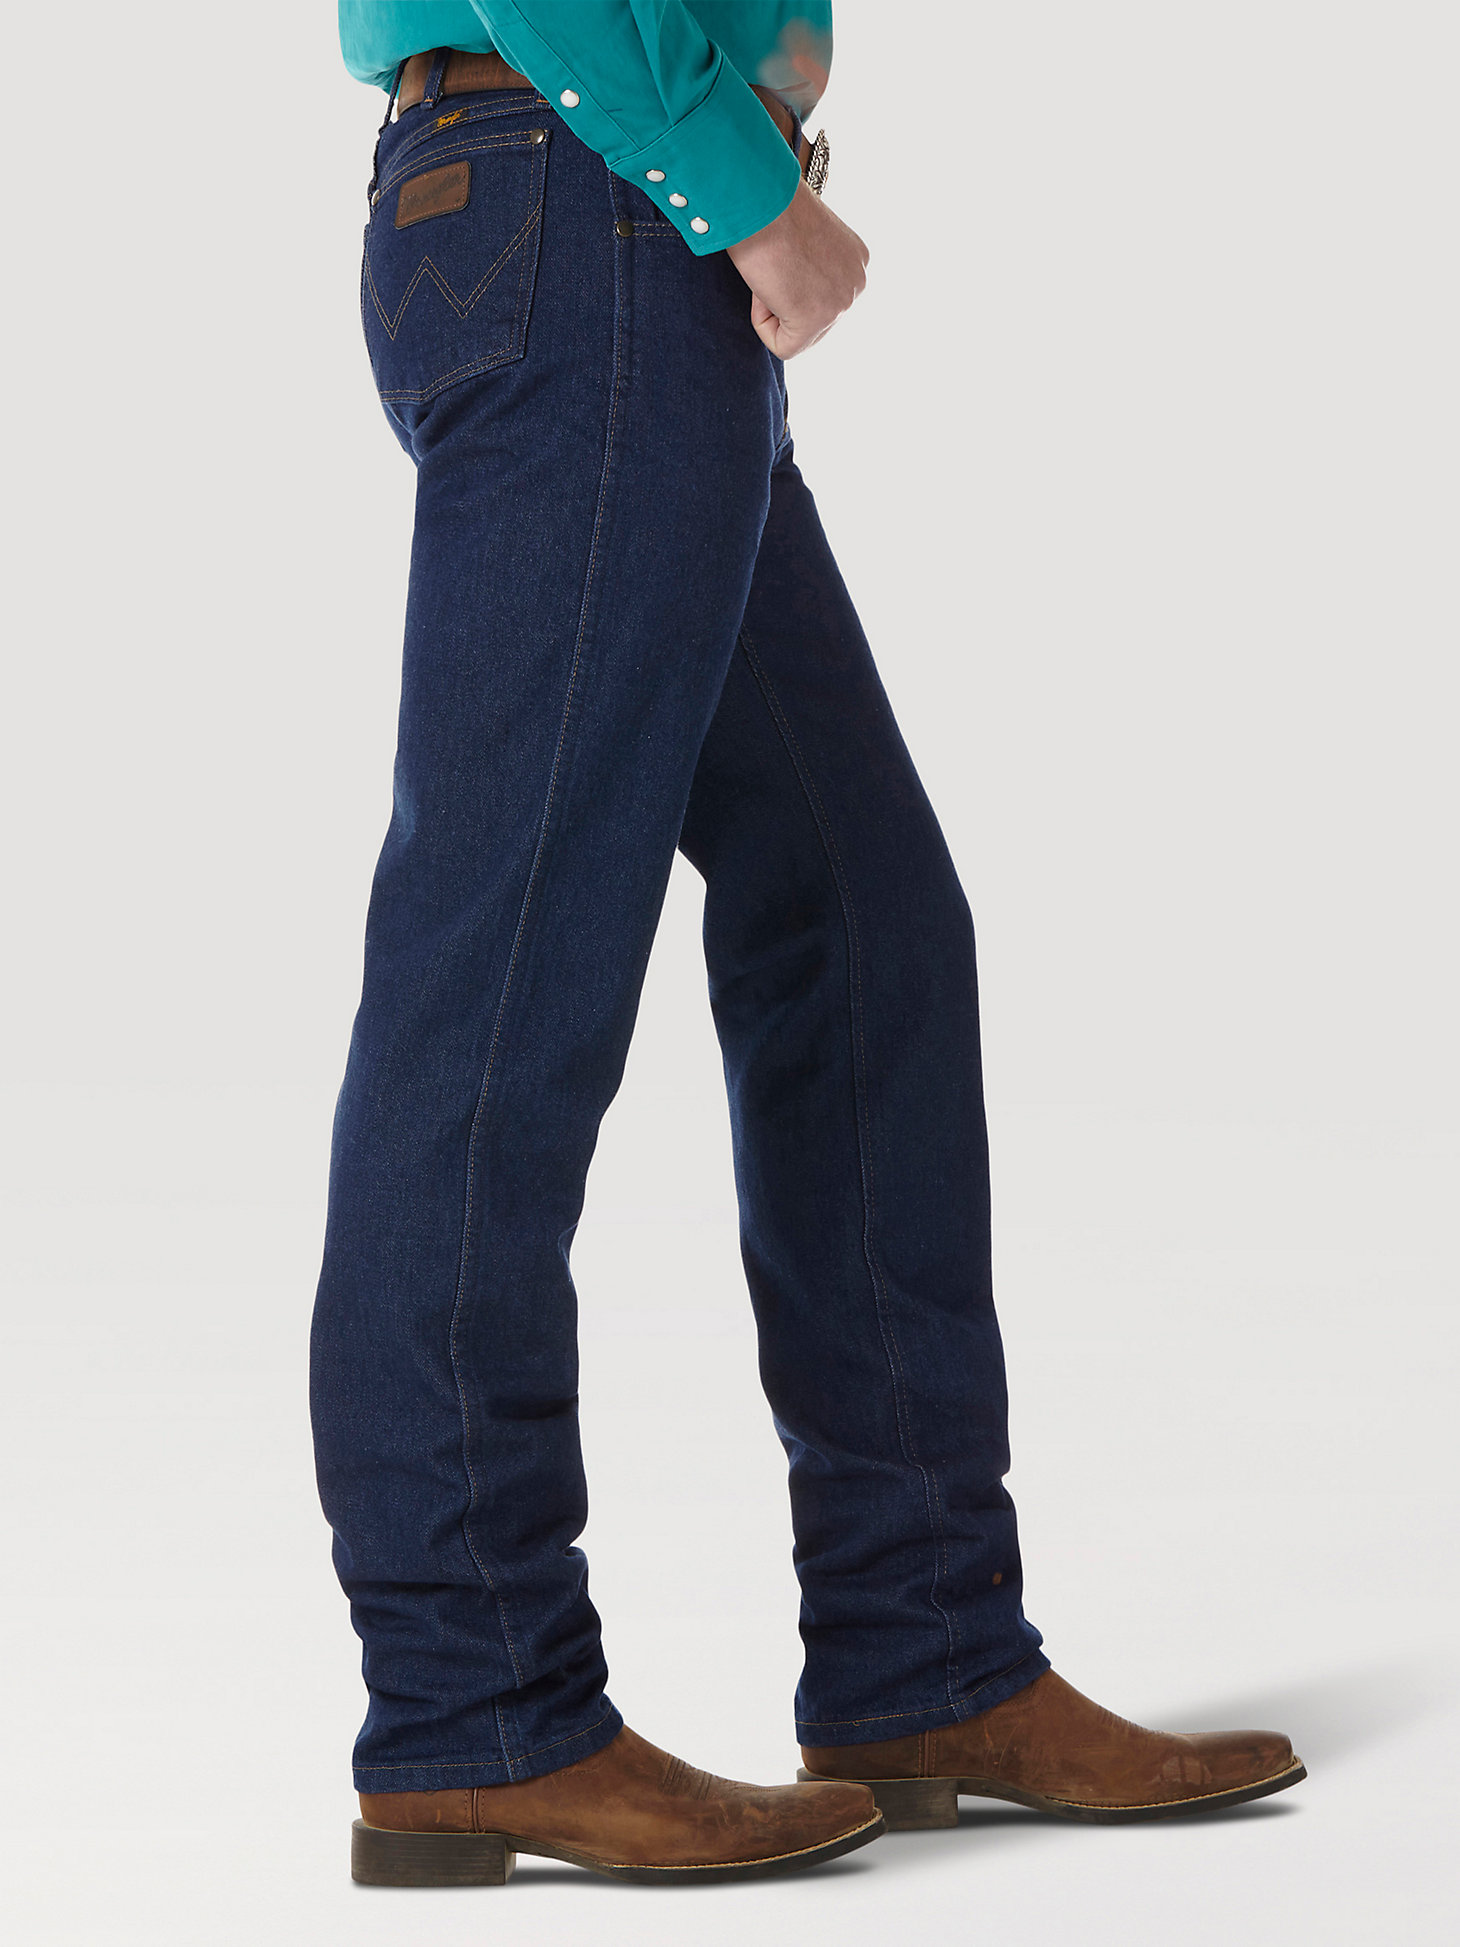 Premium Performance Cowboy Cut® Regular Fit Jean in Prewashed alternative view 1